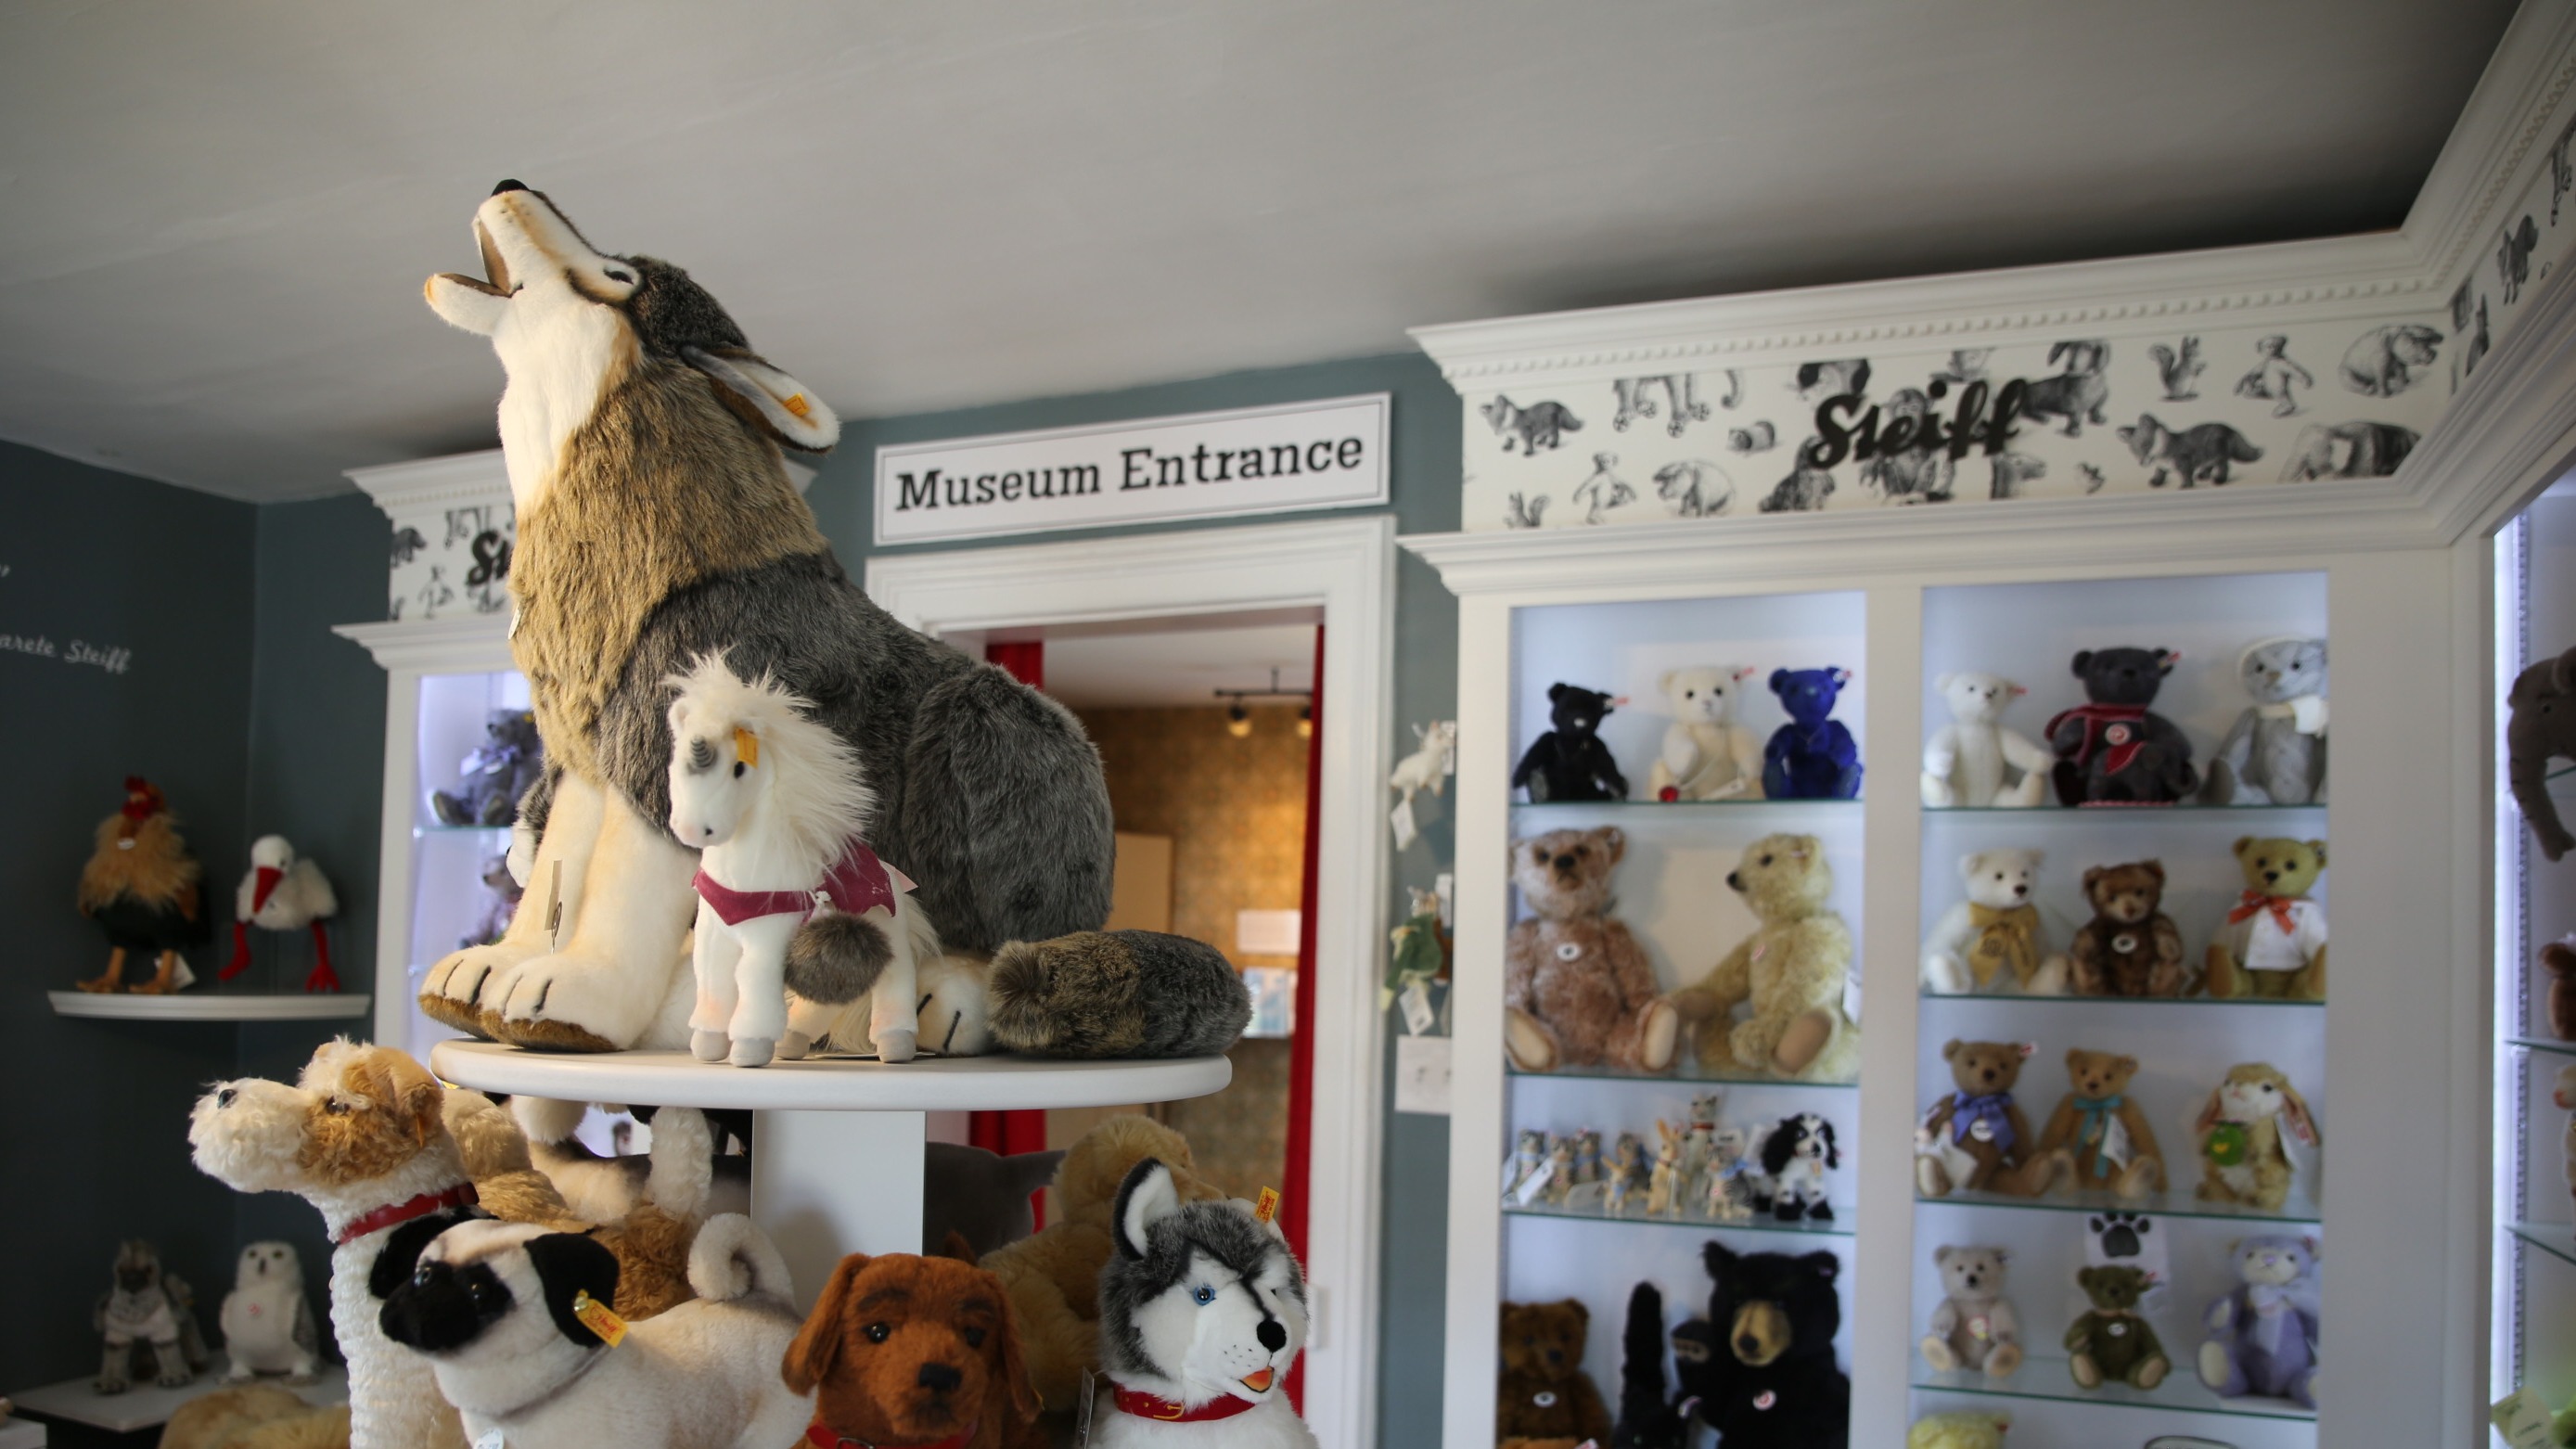 Teddy Bear Museum restaurants, addresses, phone numbers, photos